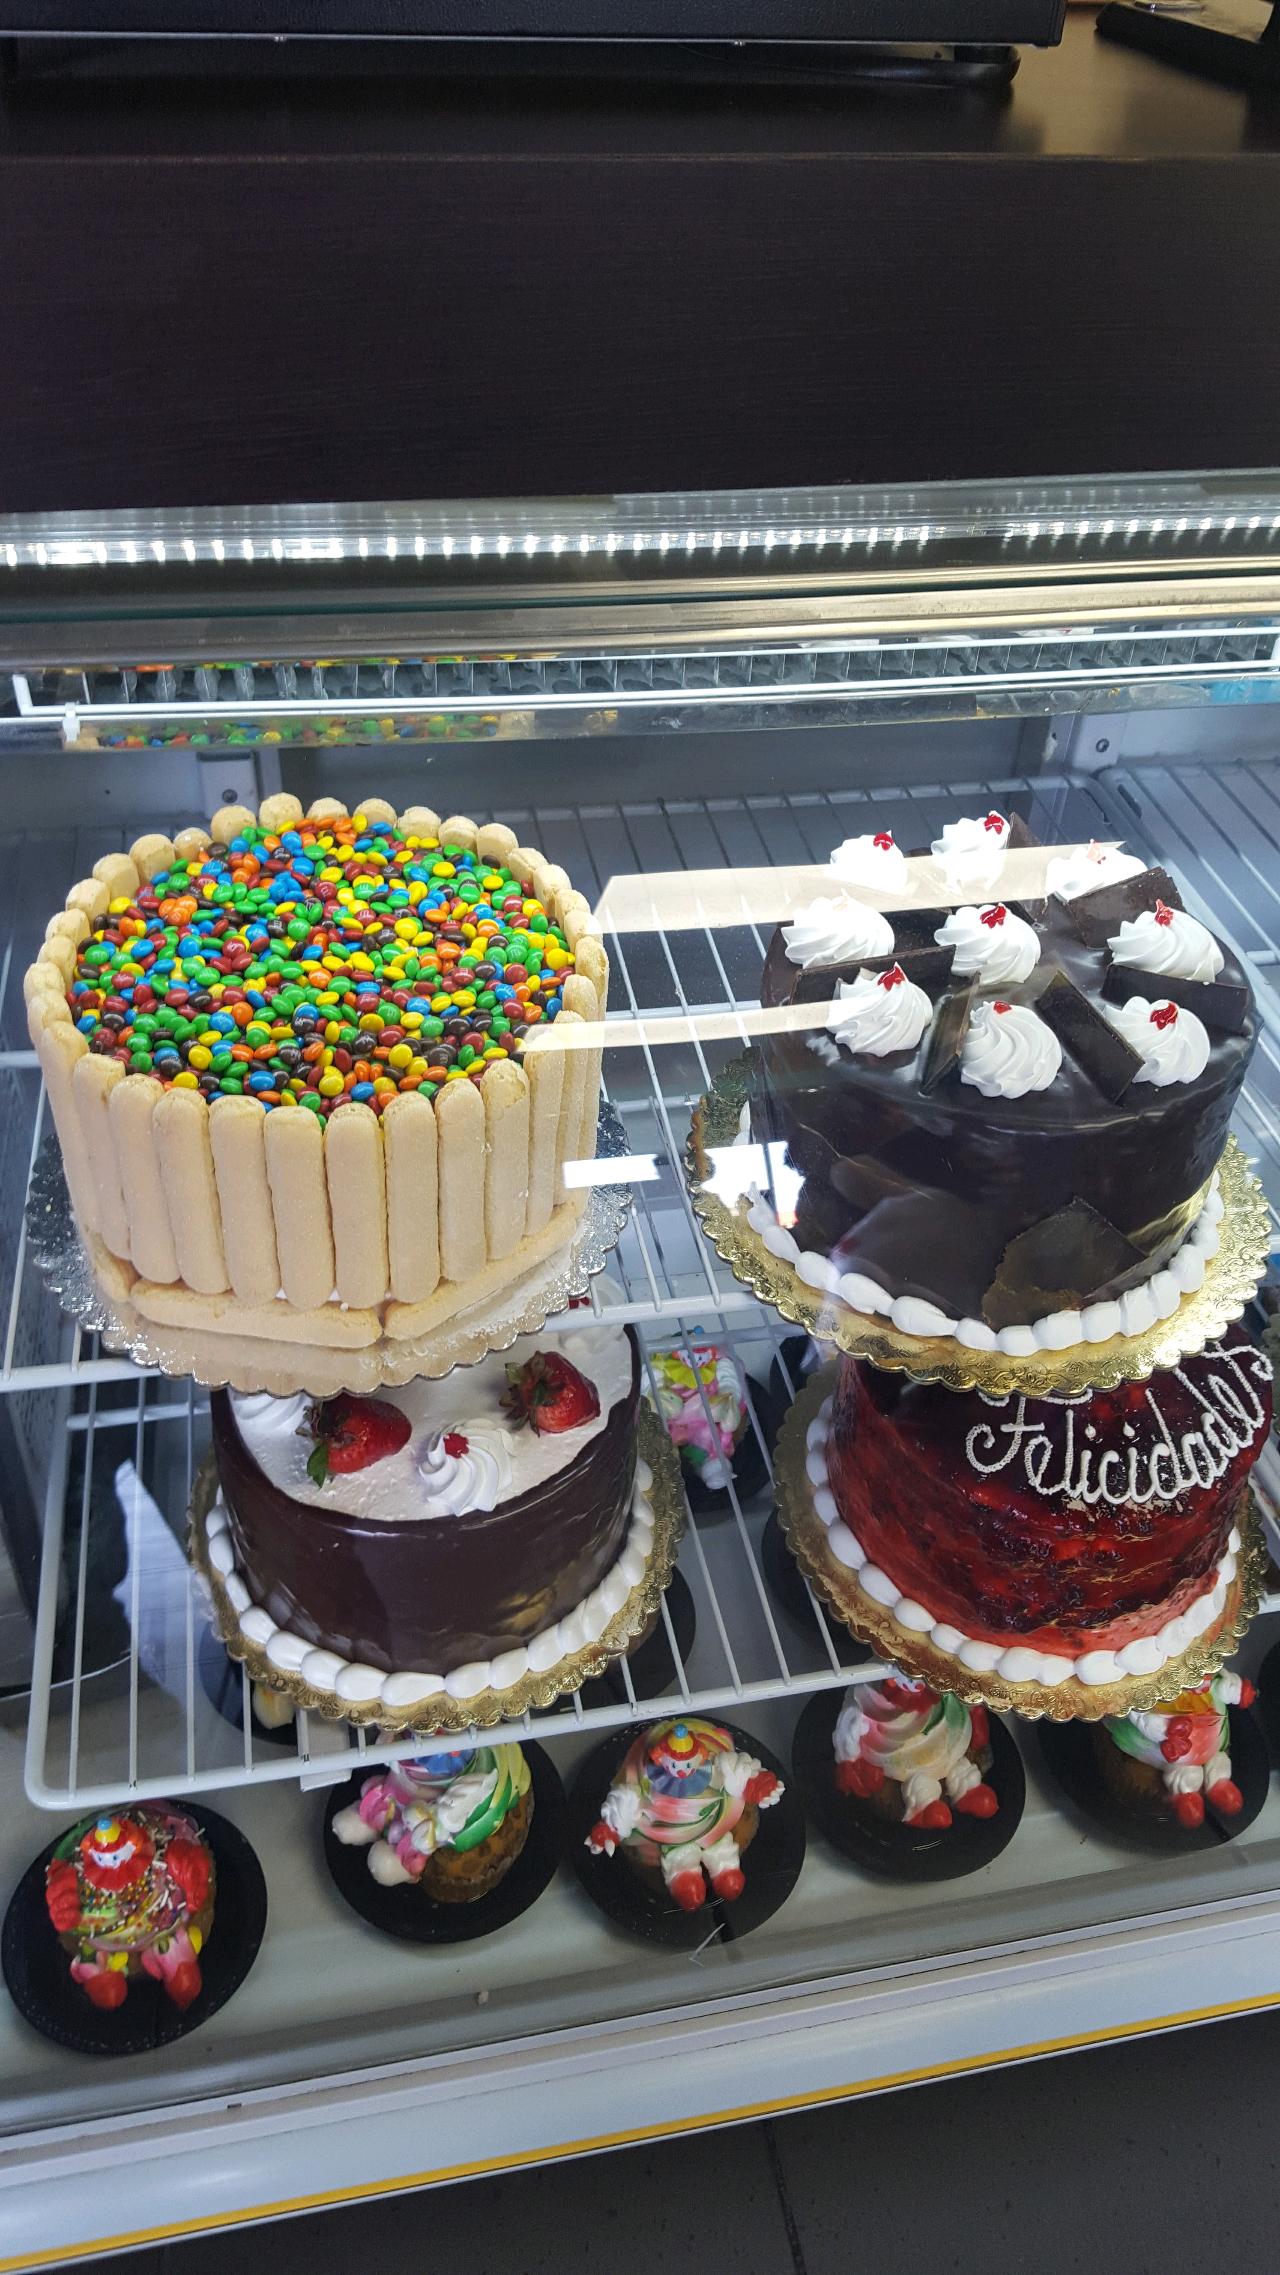 costco cake designs 2022 & prices plus #cupcakes #catalog #wedding sheet cake #pastel #tijuana 